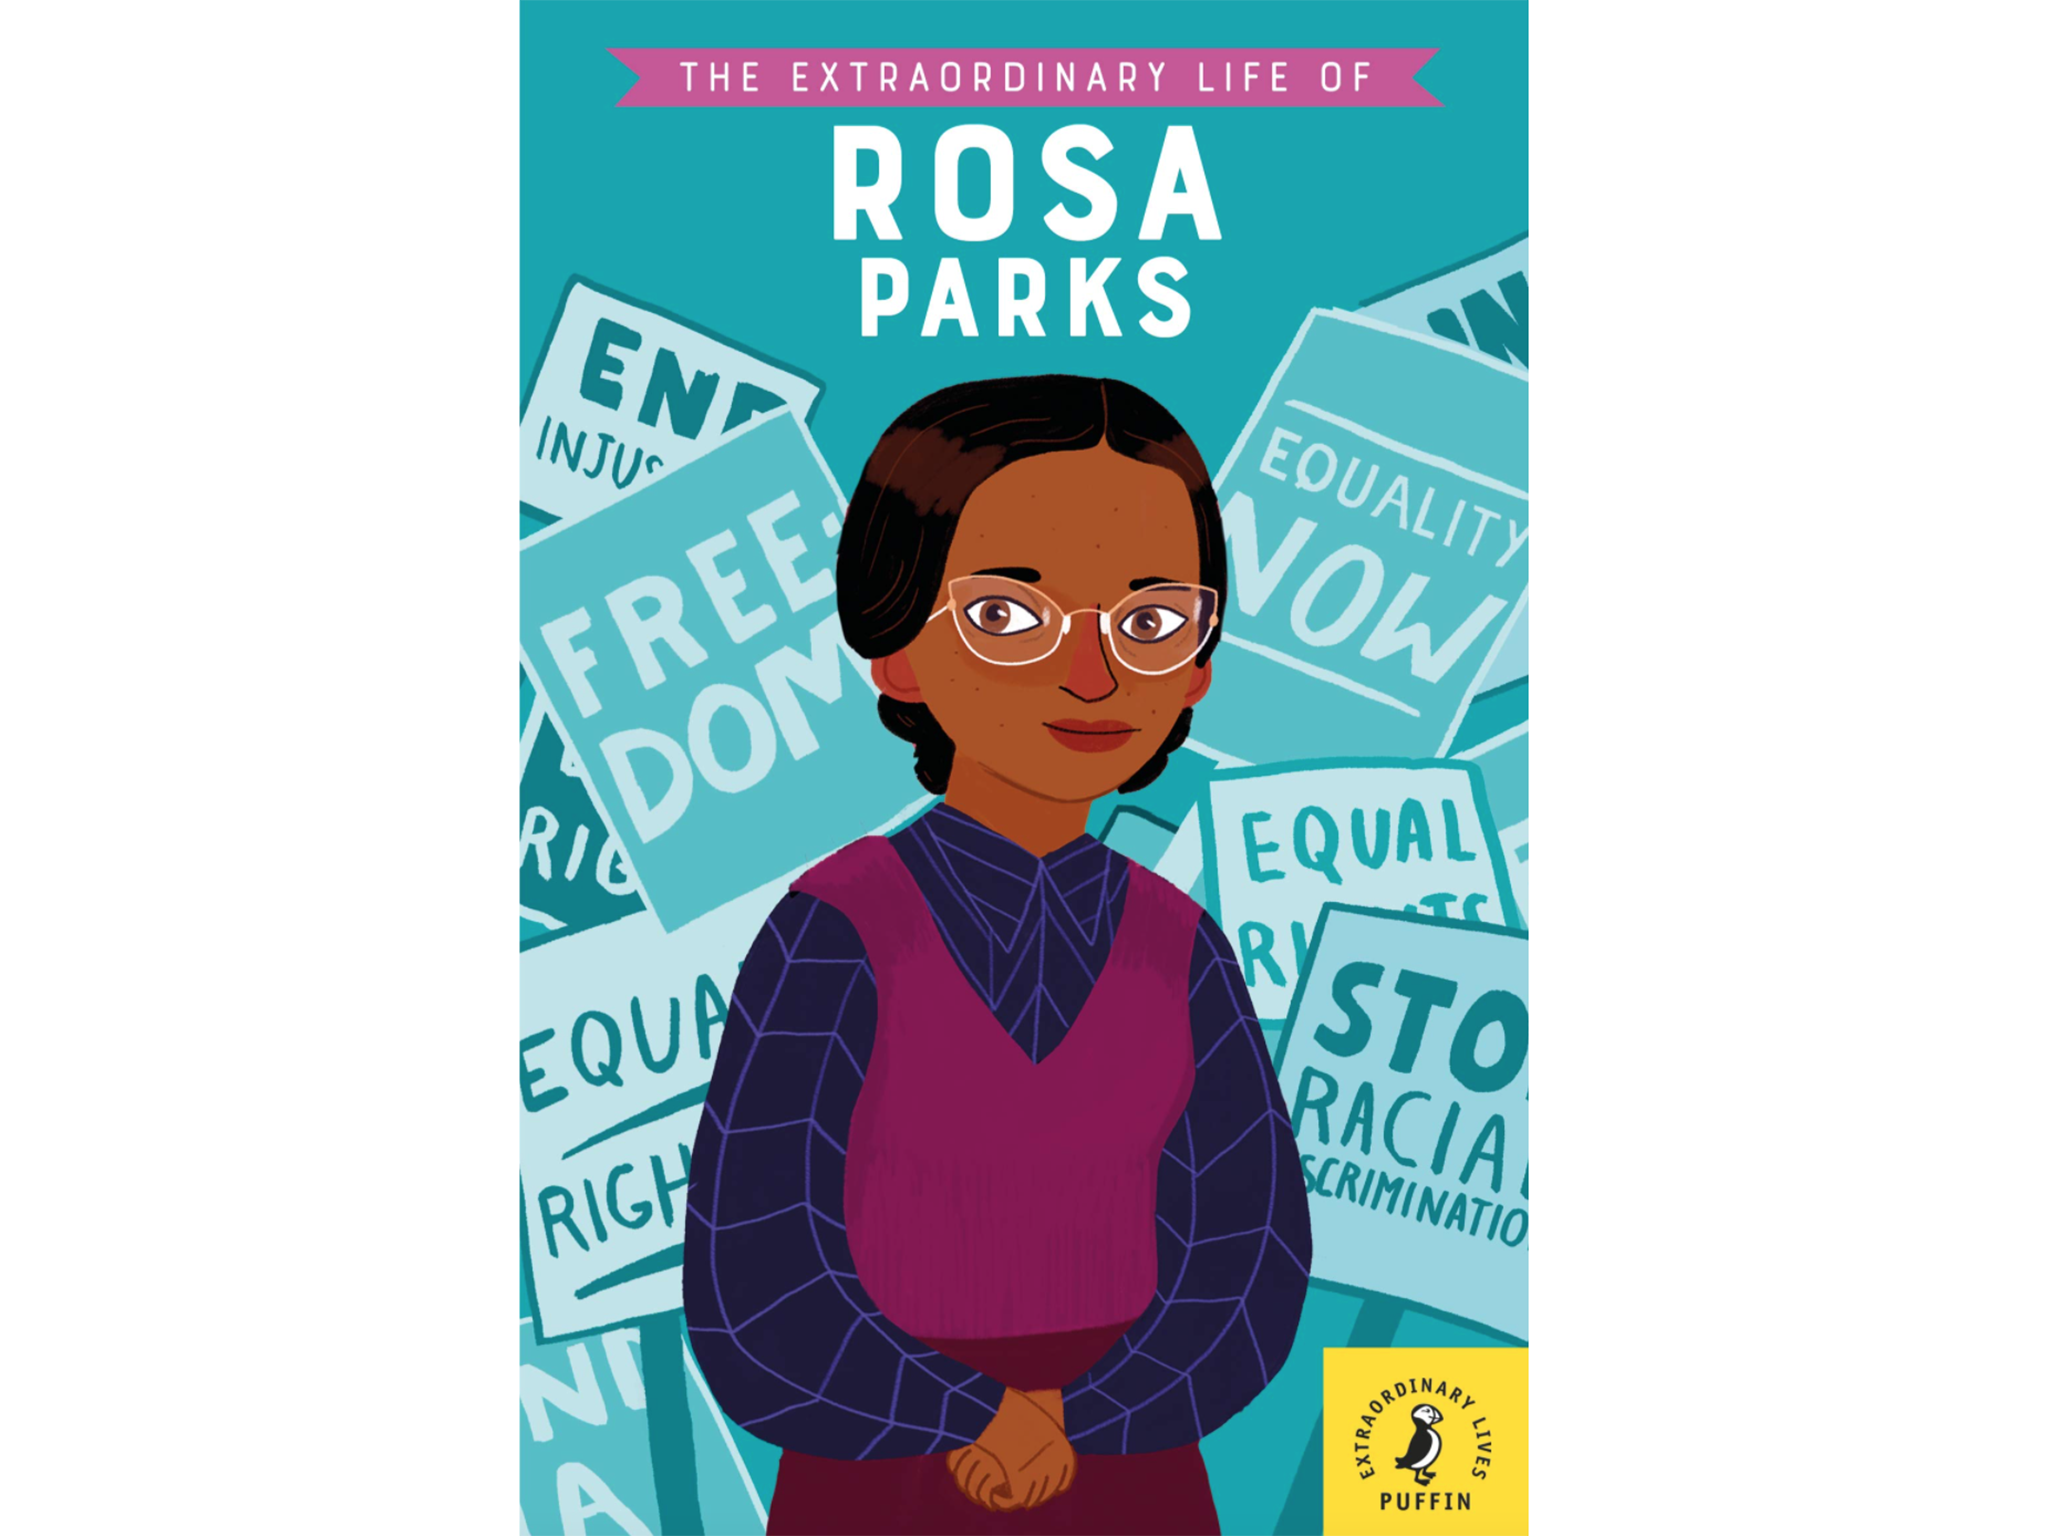 ‘The Extraordinary Life of Rosa Parks’ by Sheila Kanani